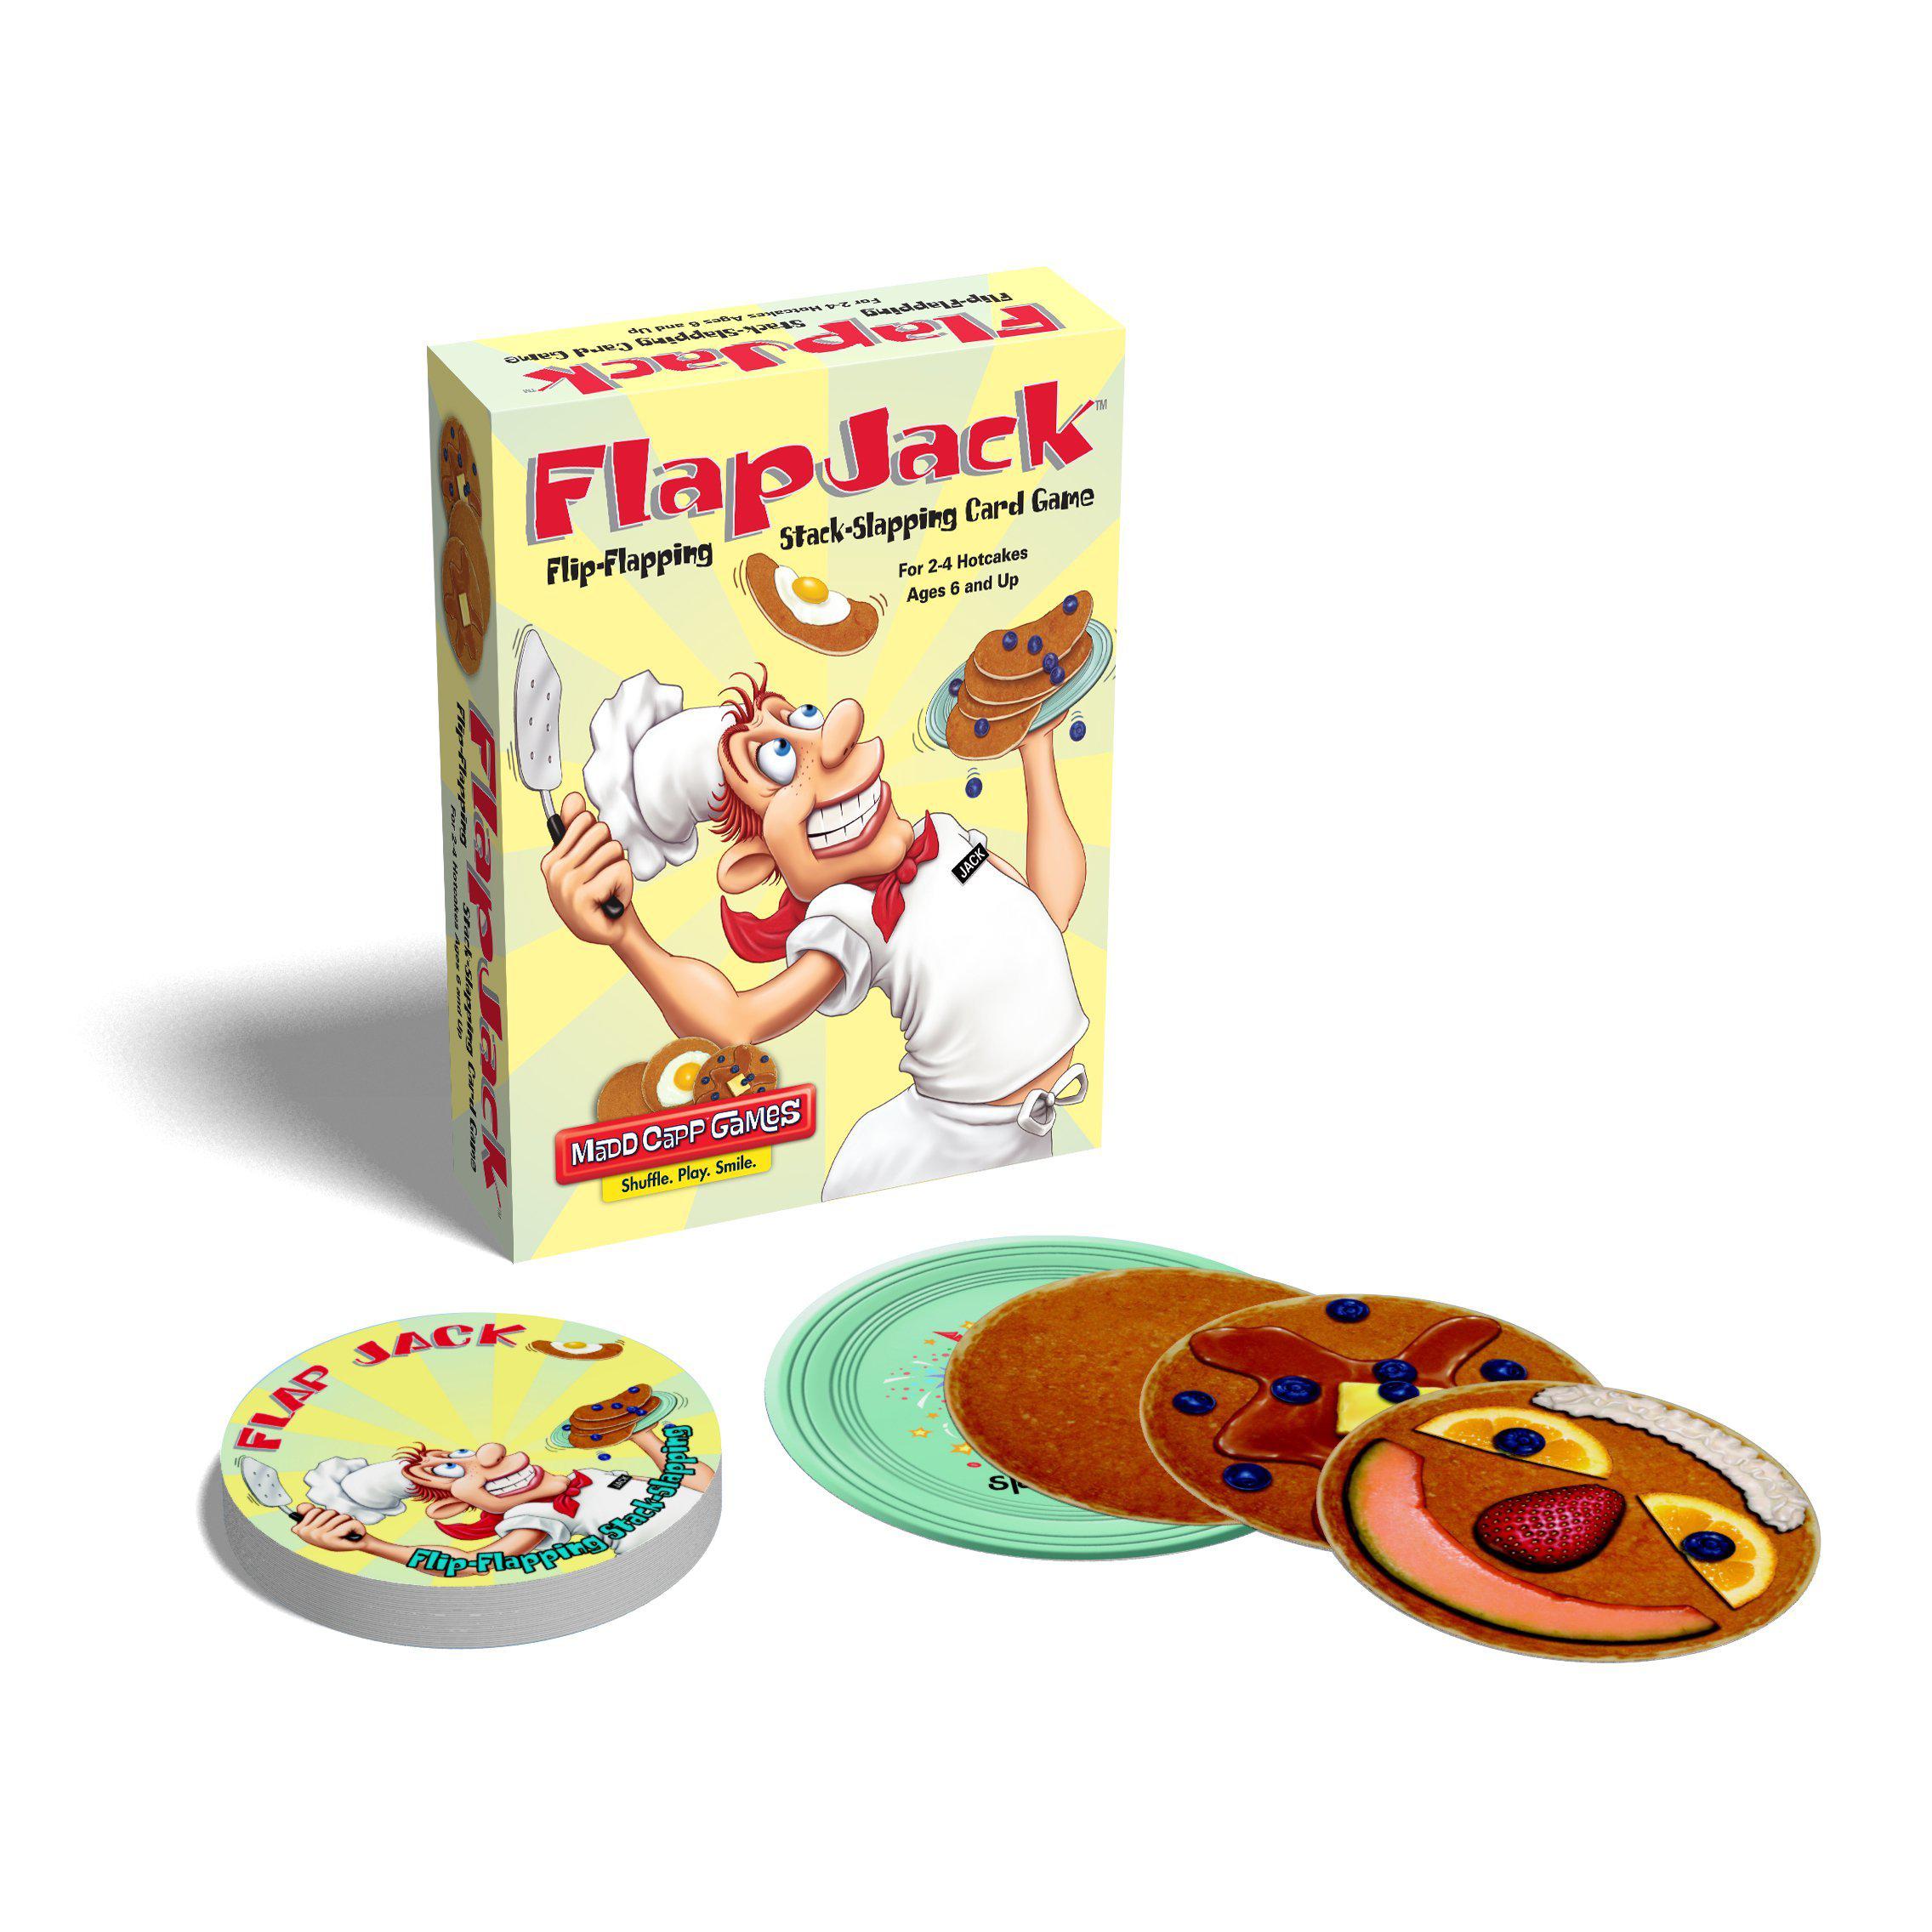 madd capp flap jack card game